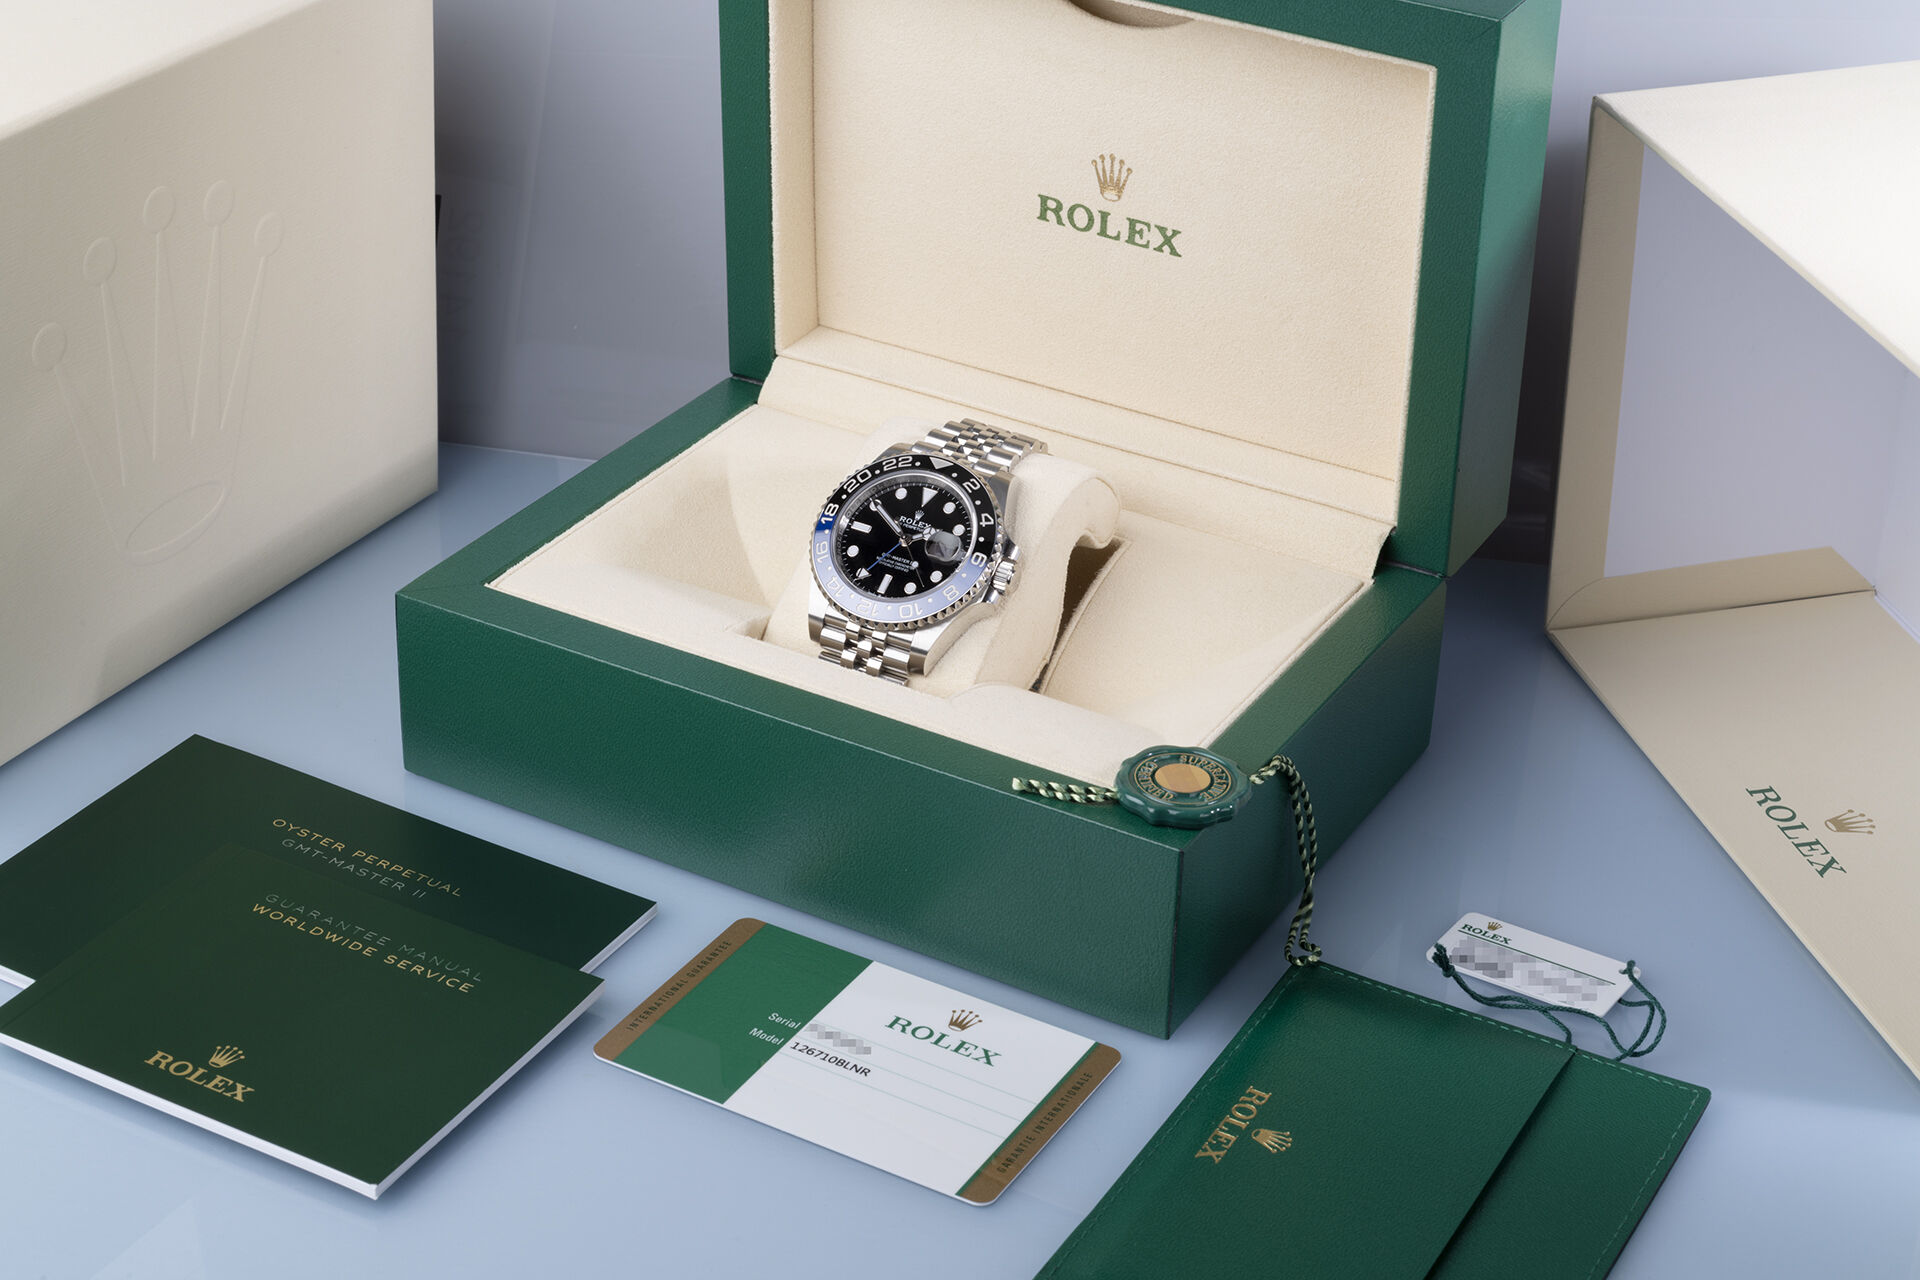 ref 126710BLNR | Box & Certificate | Rolex GMT-Master II